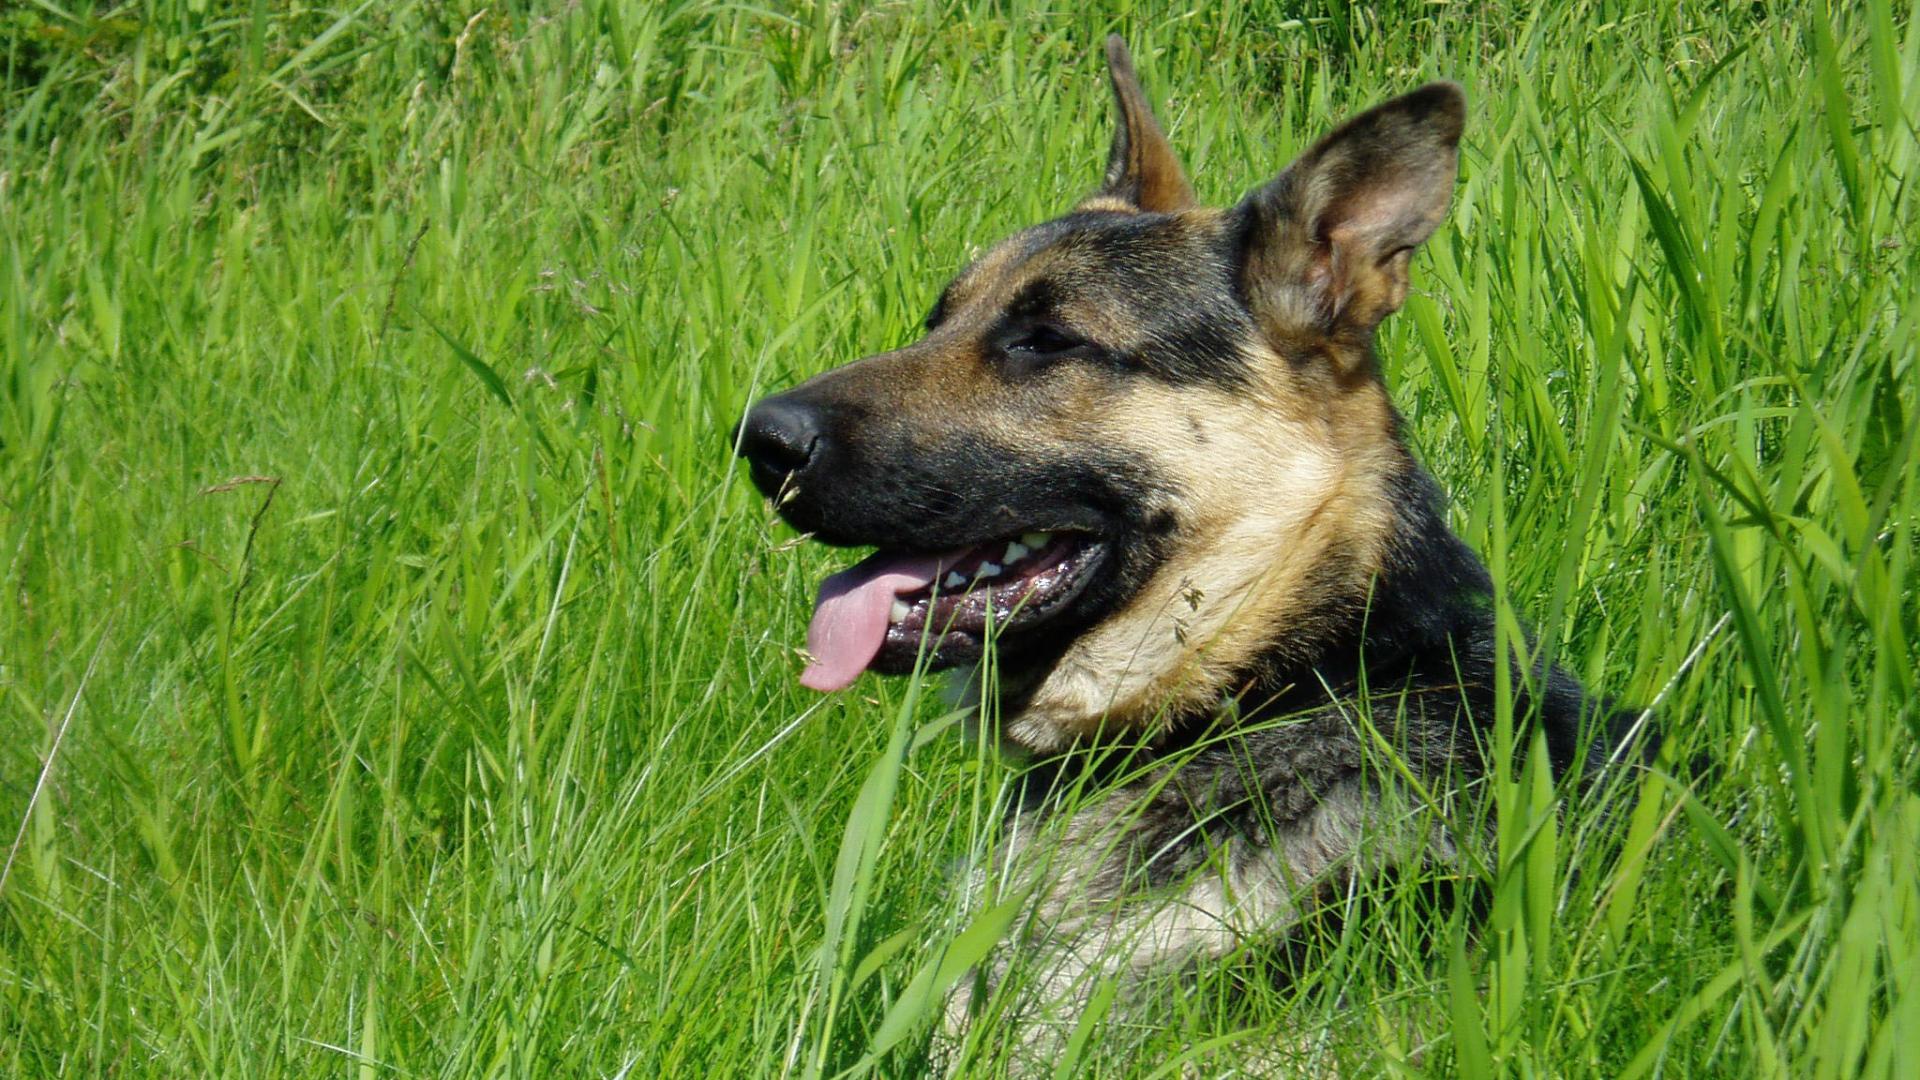 Download Wallpaper German Shepherd Dog in the grass 1920 x 1080 HDTV